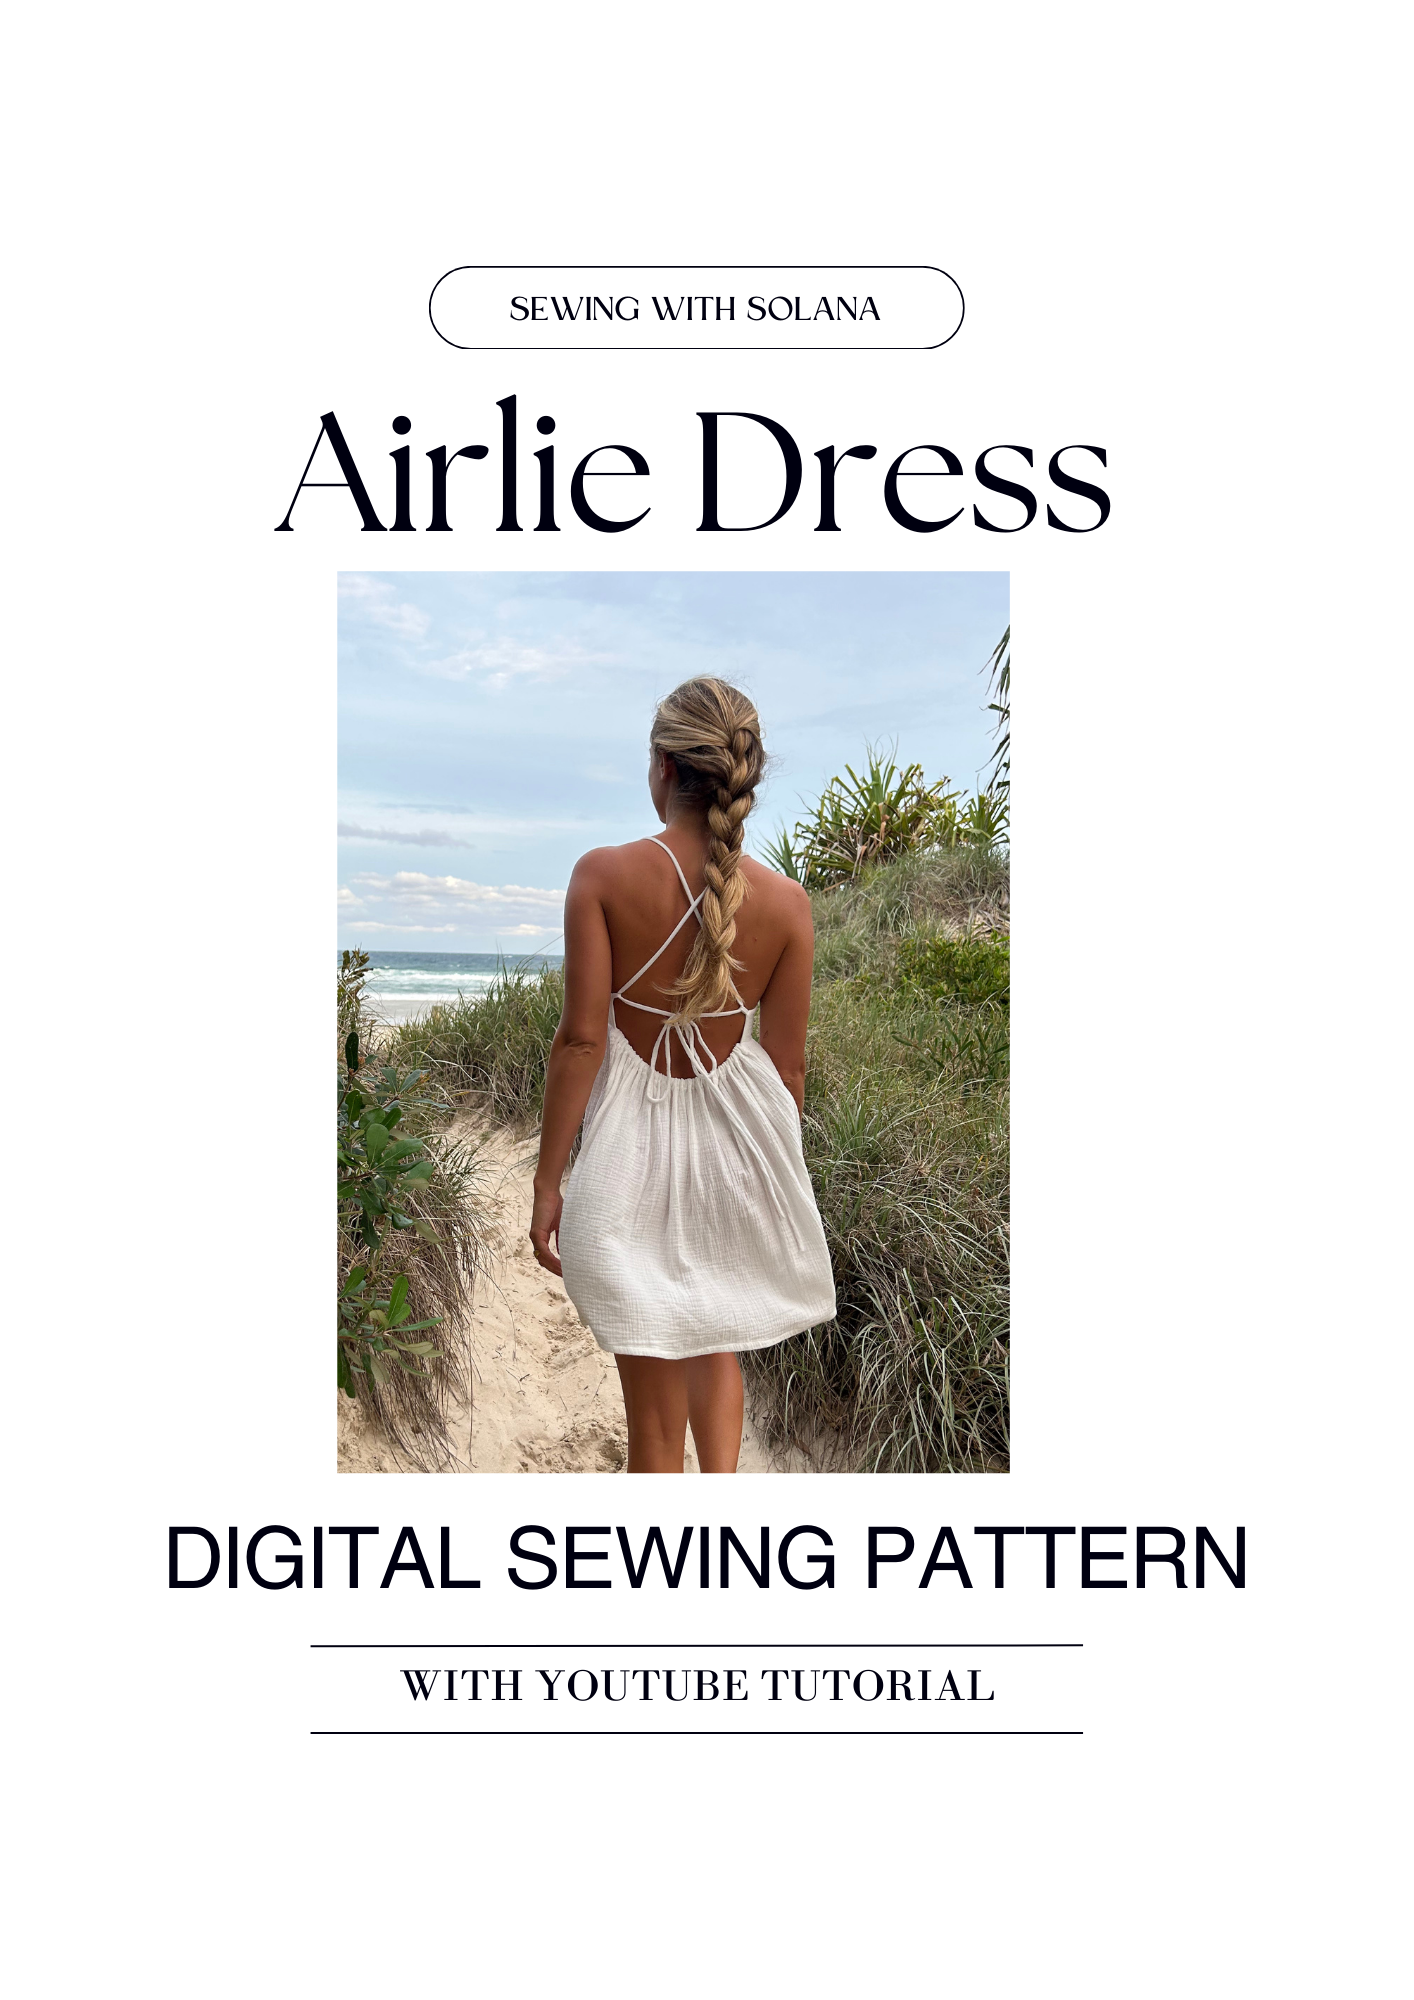 Airlie Dress - Digital Sewing Pattern